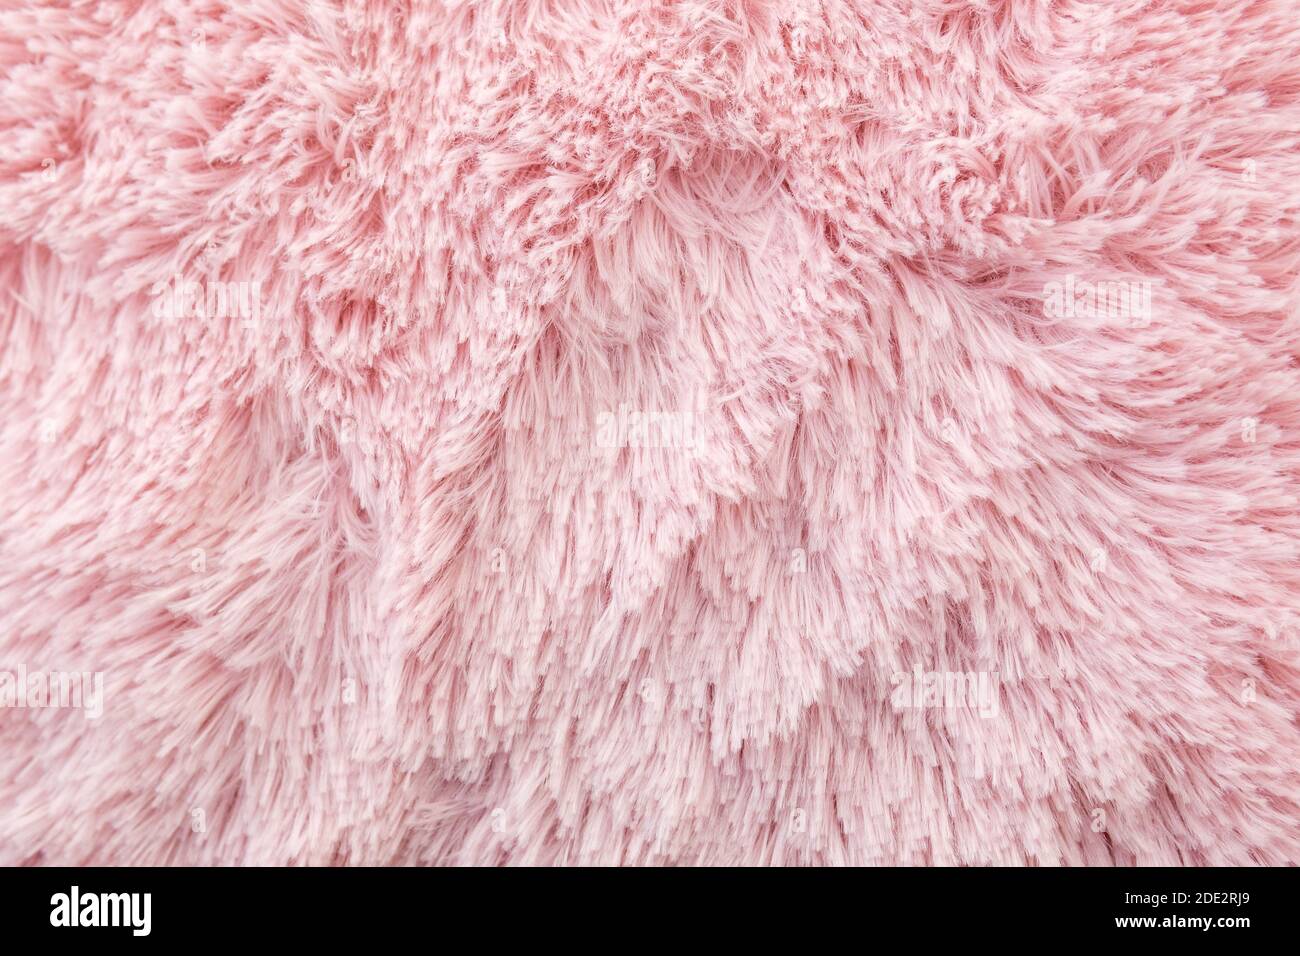 100+] Carpet Texture Pictures | Wallpapers.com